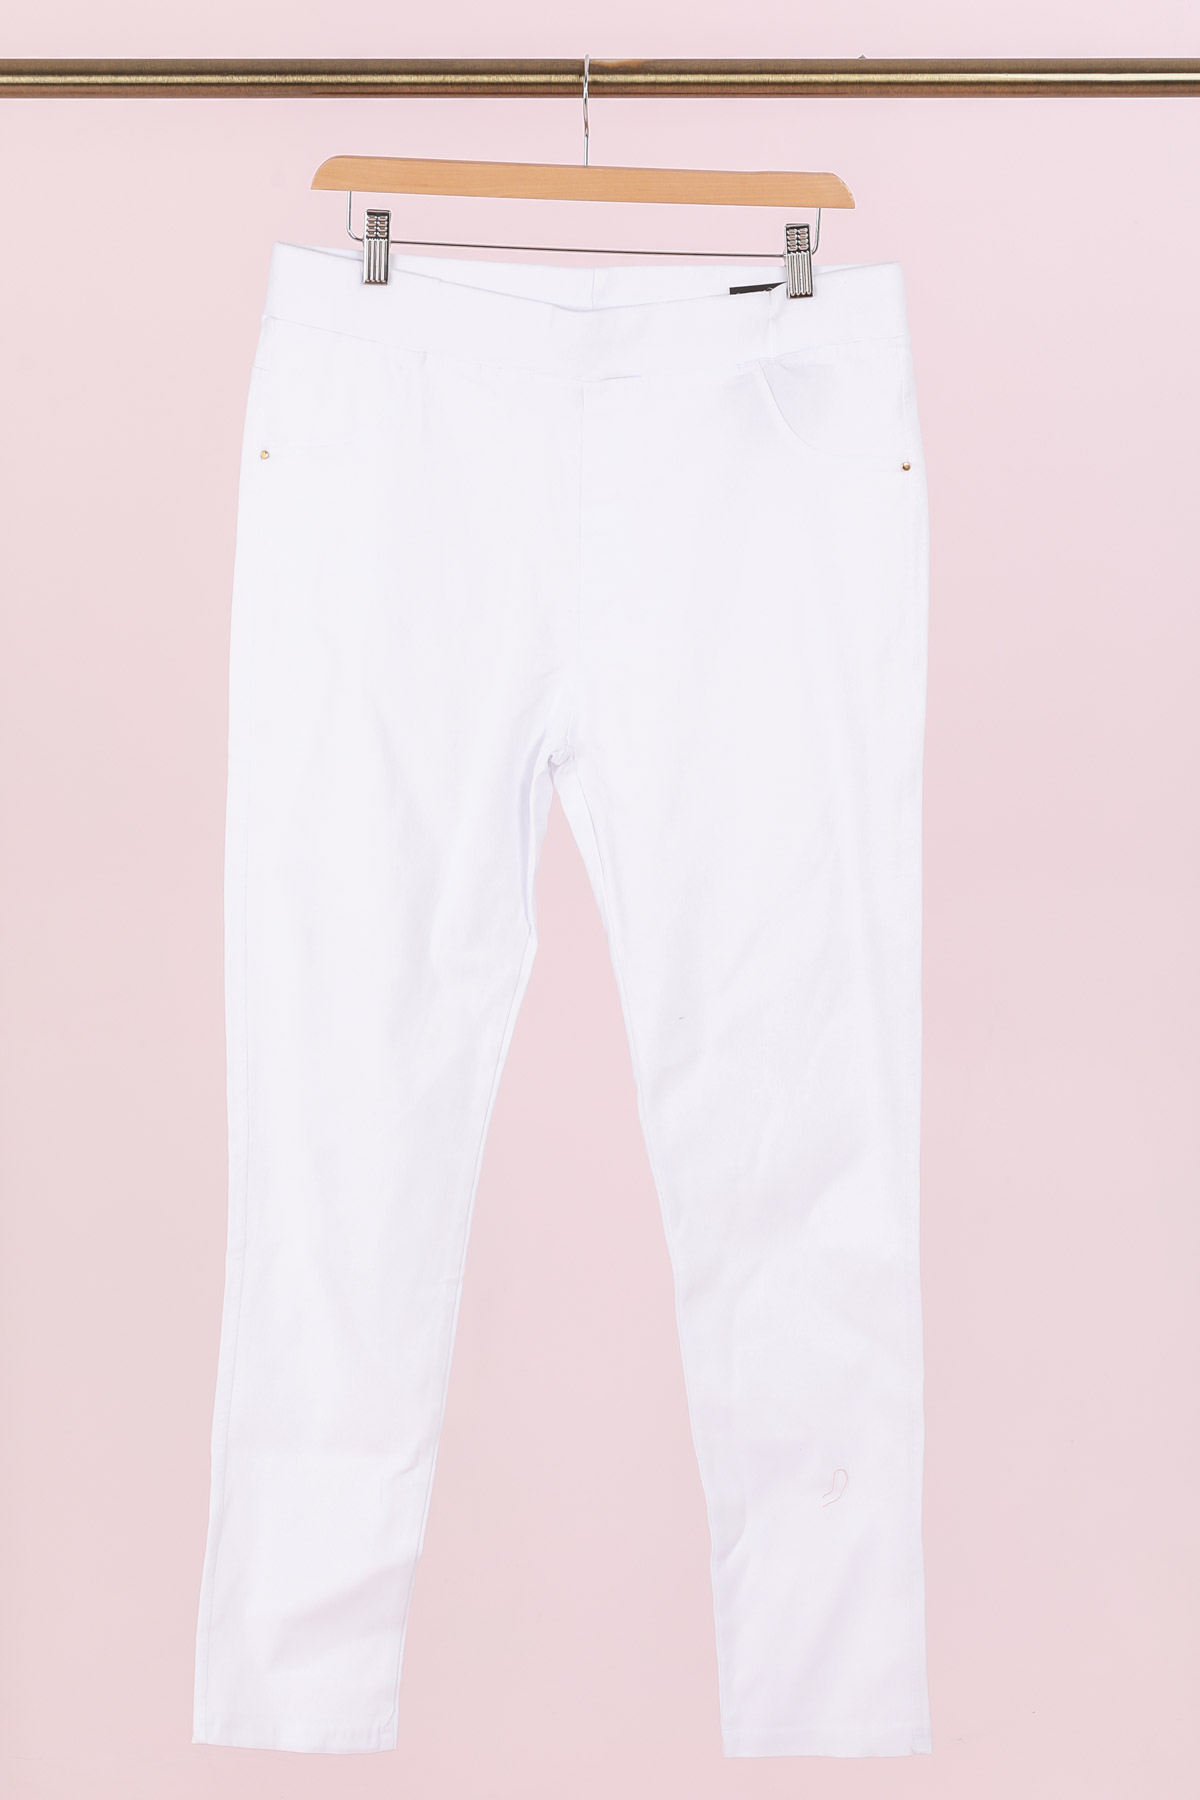 Pantalons Femme Blanc Christy 6502 #c Efashion Paris